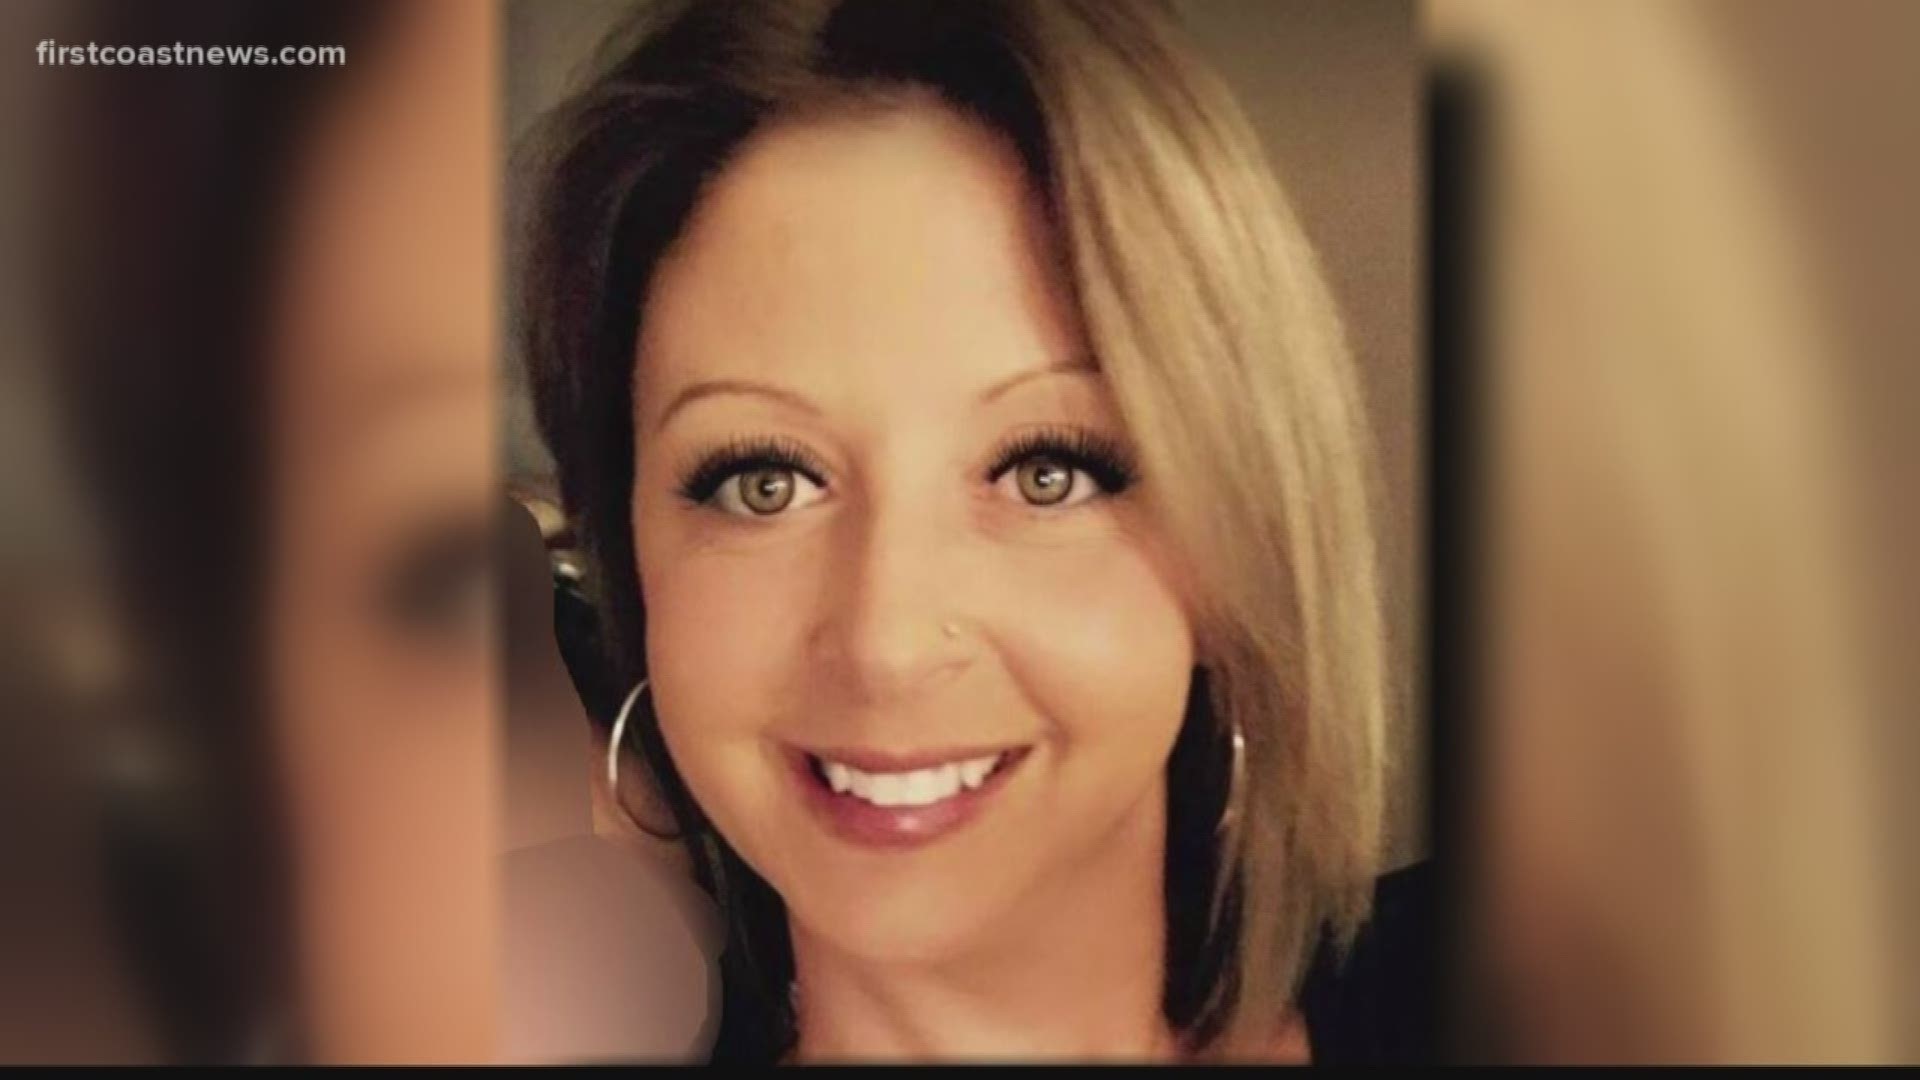 Joleen Cummings, mother of 3, was last seen over the weekend. Deputies arrested her ex was arrested for violating probation.